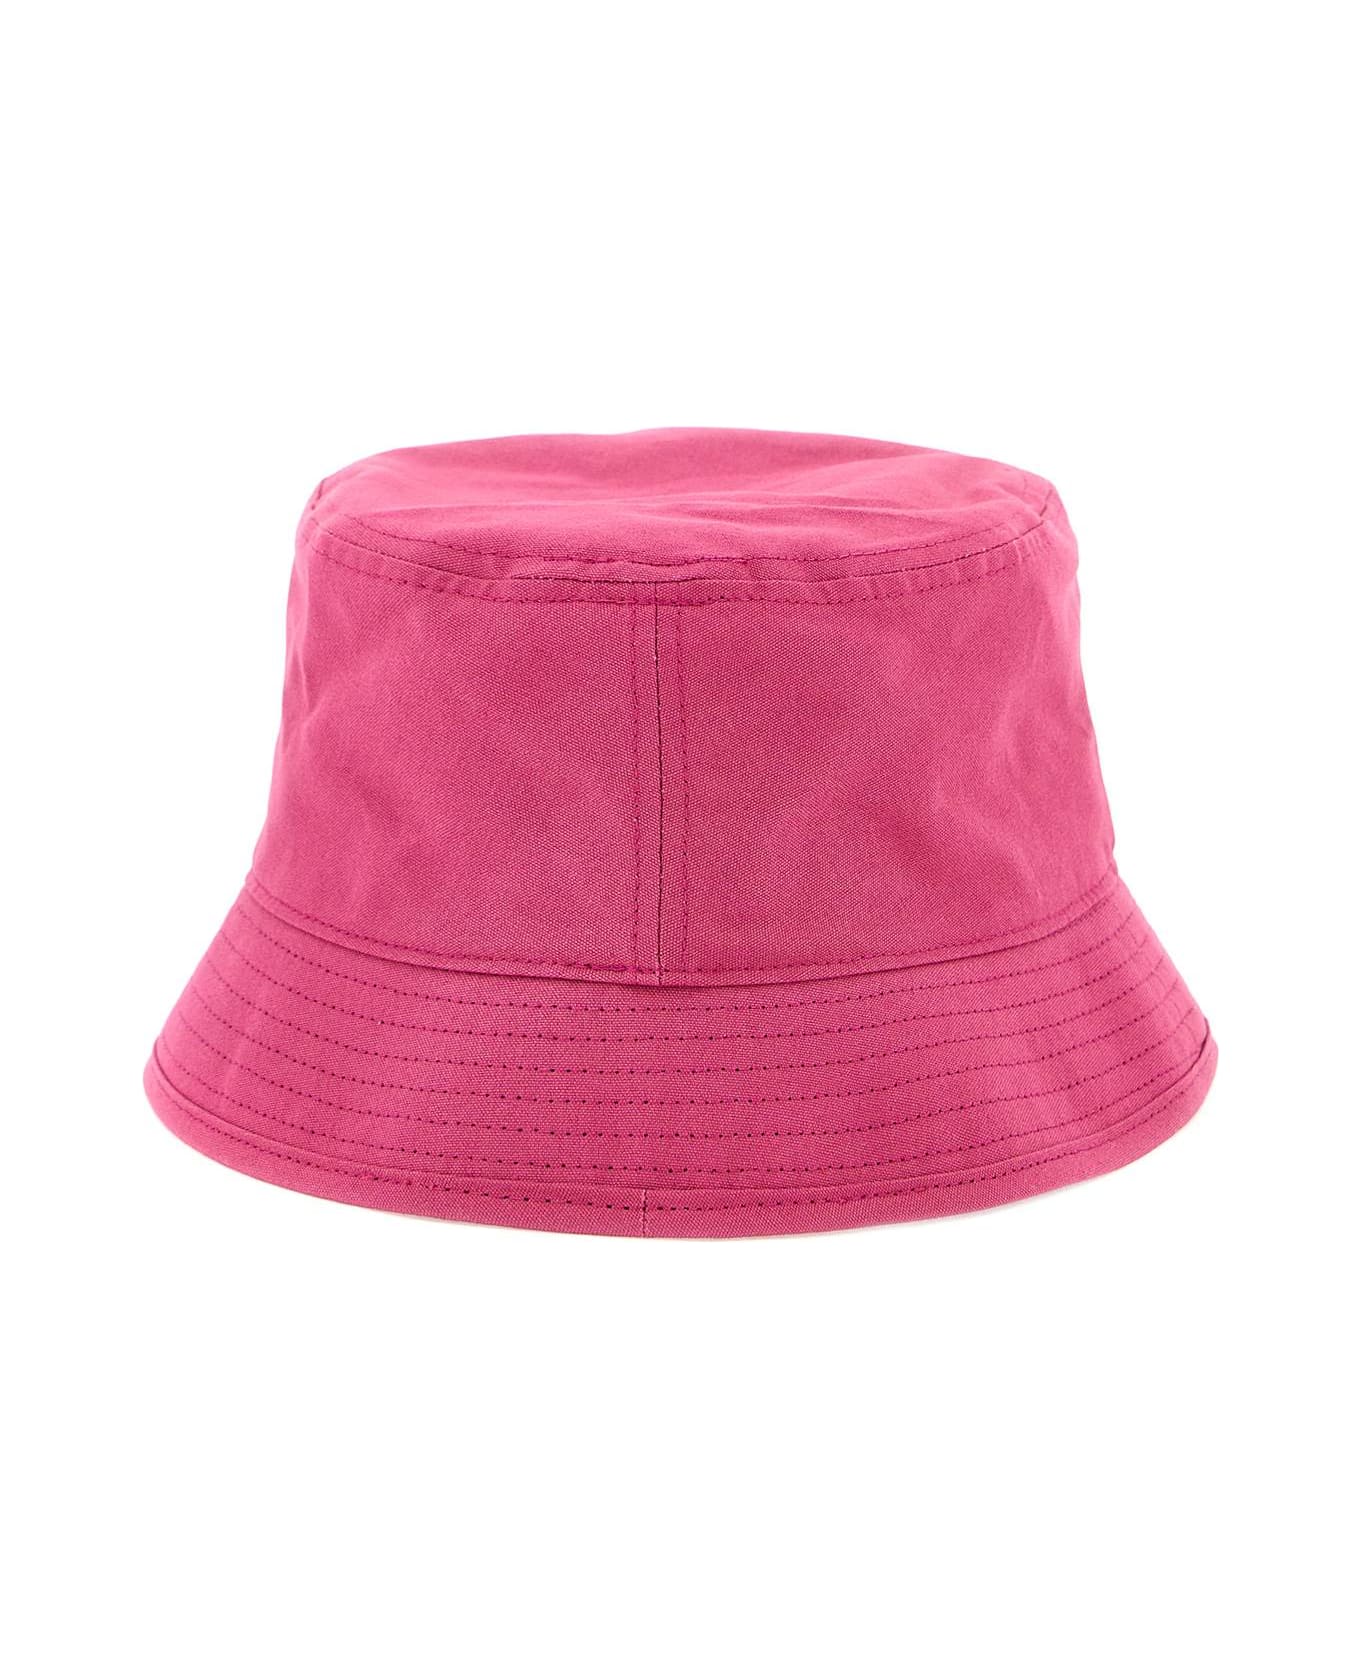 Rick Owens Drkshw X Converse Bucket Hat - HOT PINK (Fuchsia)